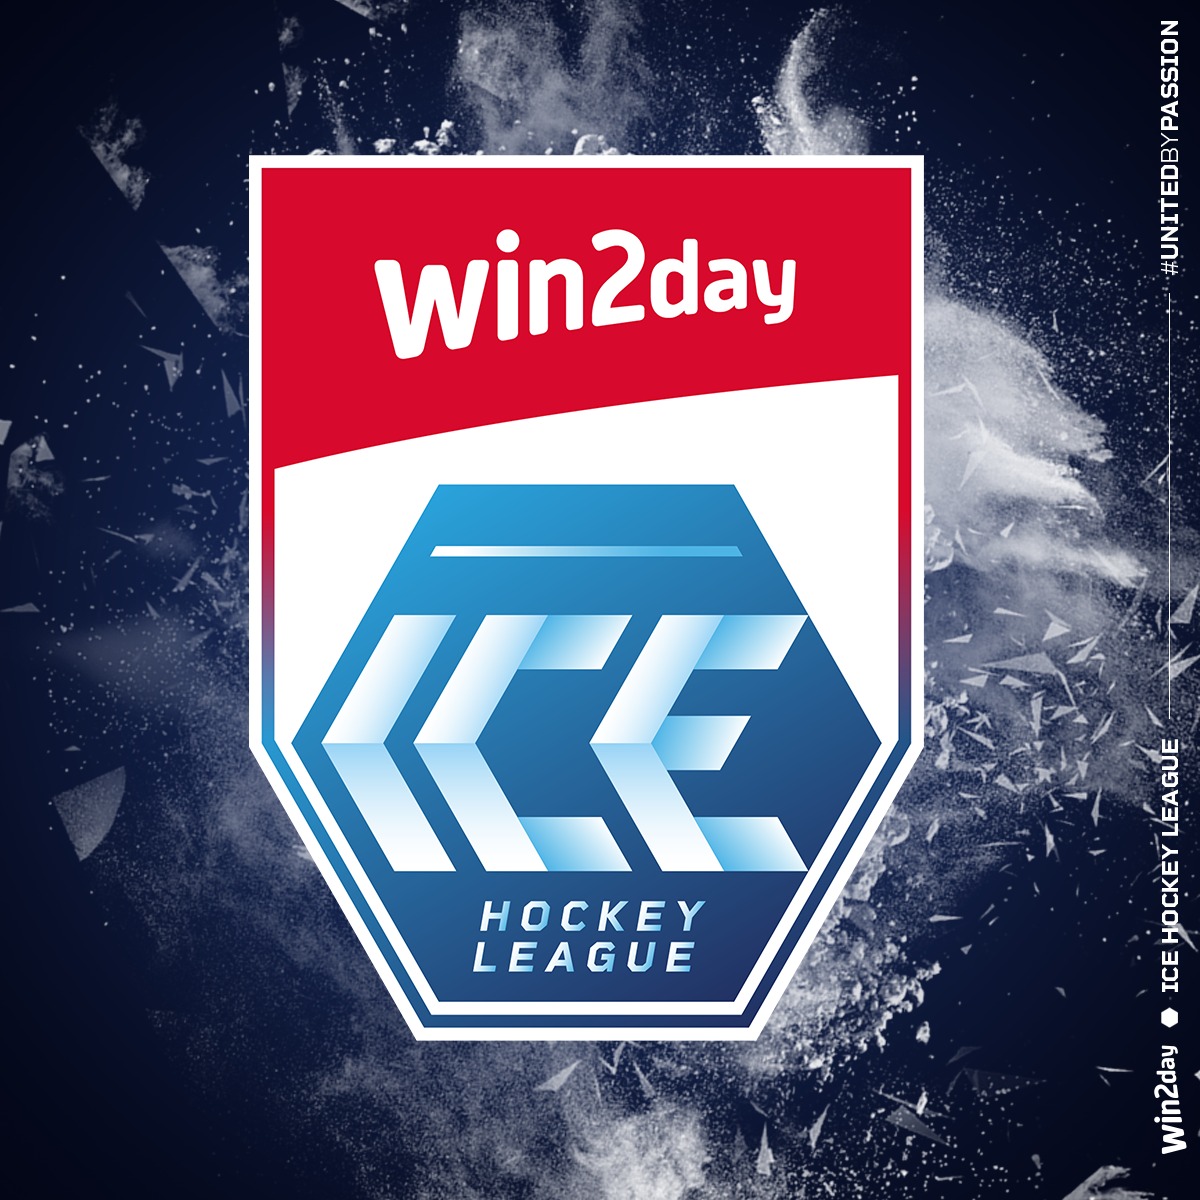 Twitter/ win2day ICE Hockey League على تويتر